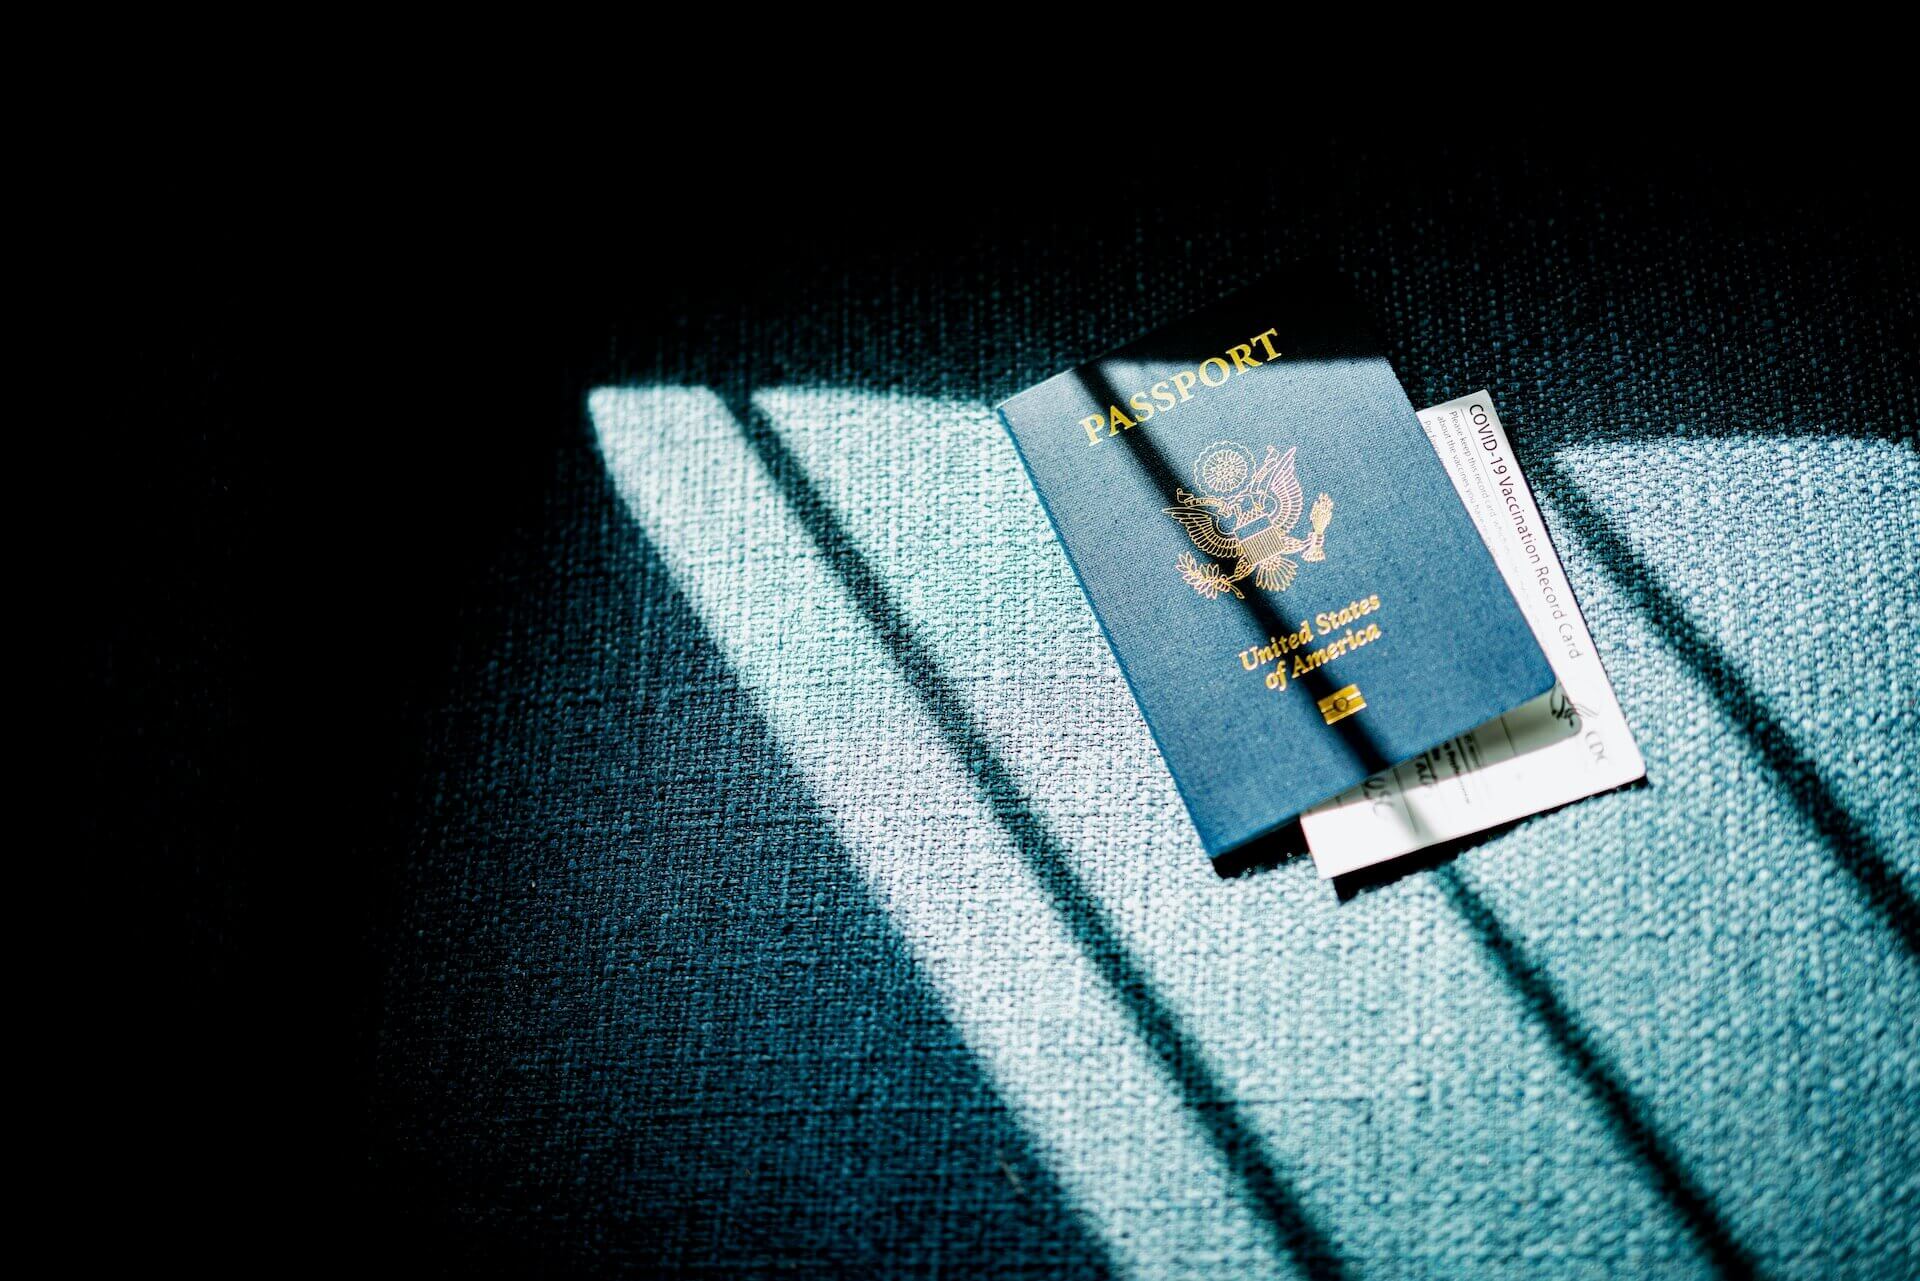 Passport for traveling